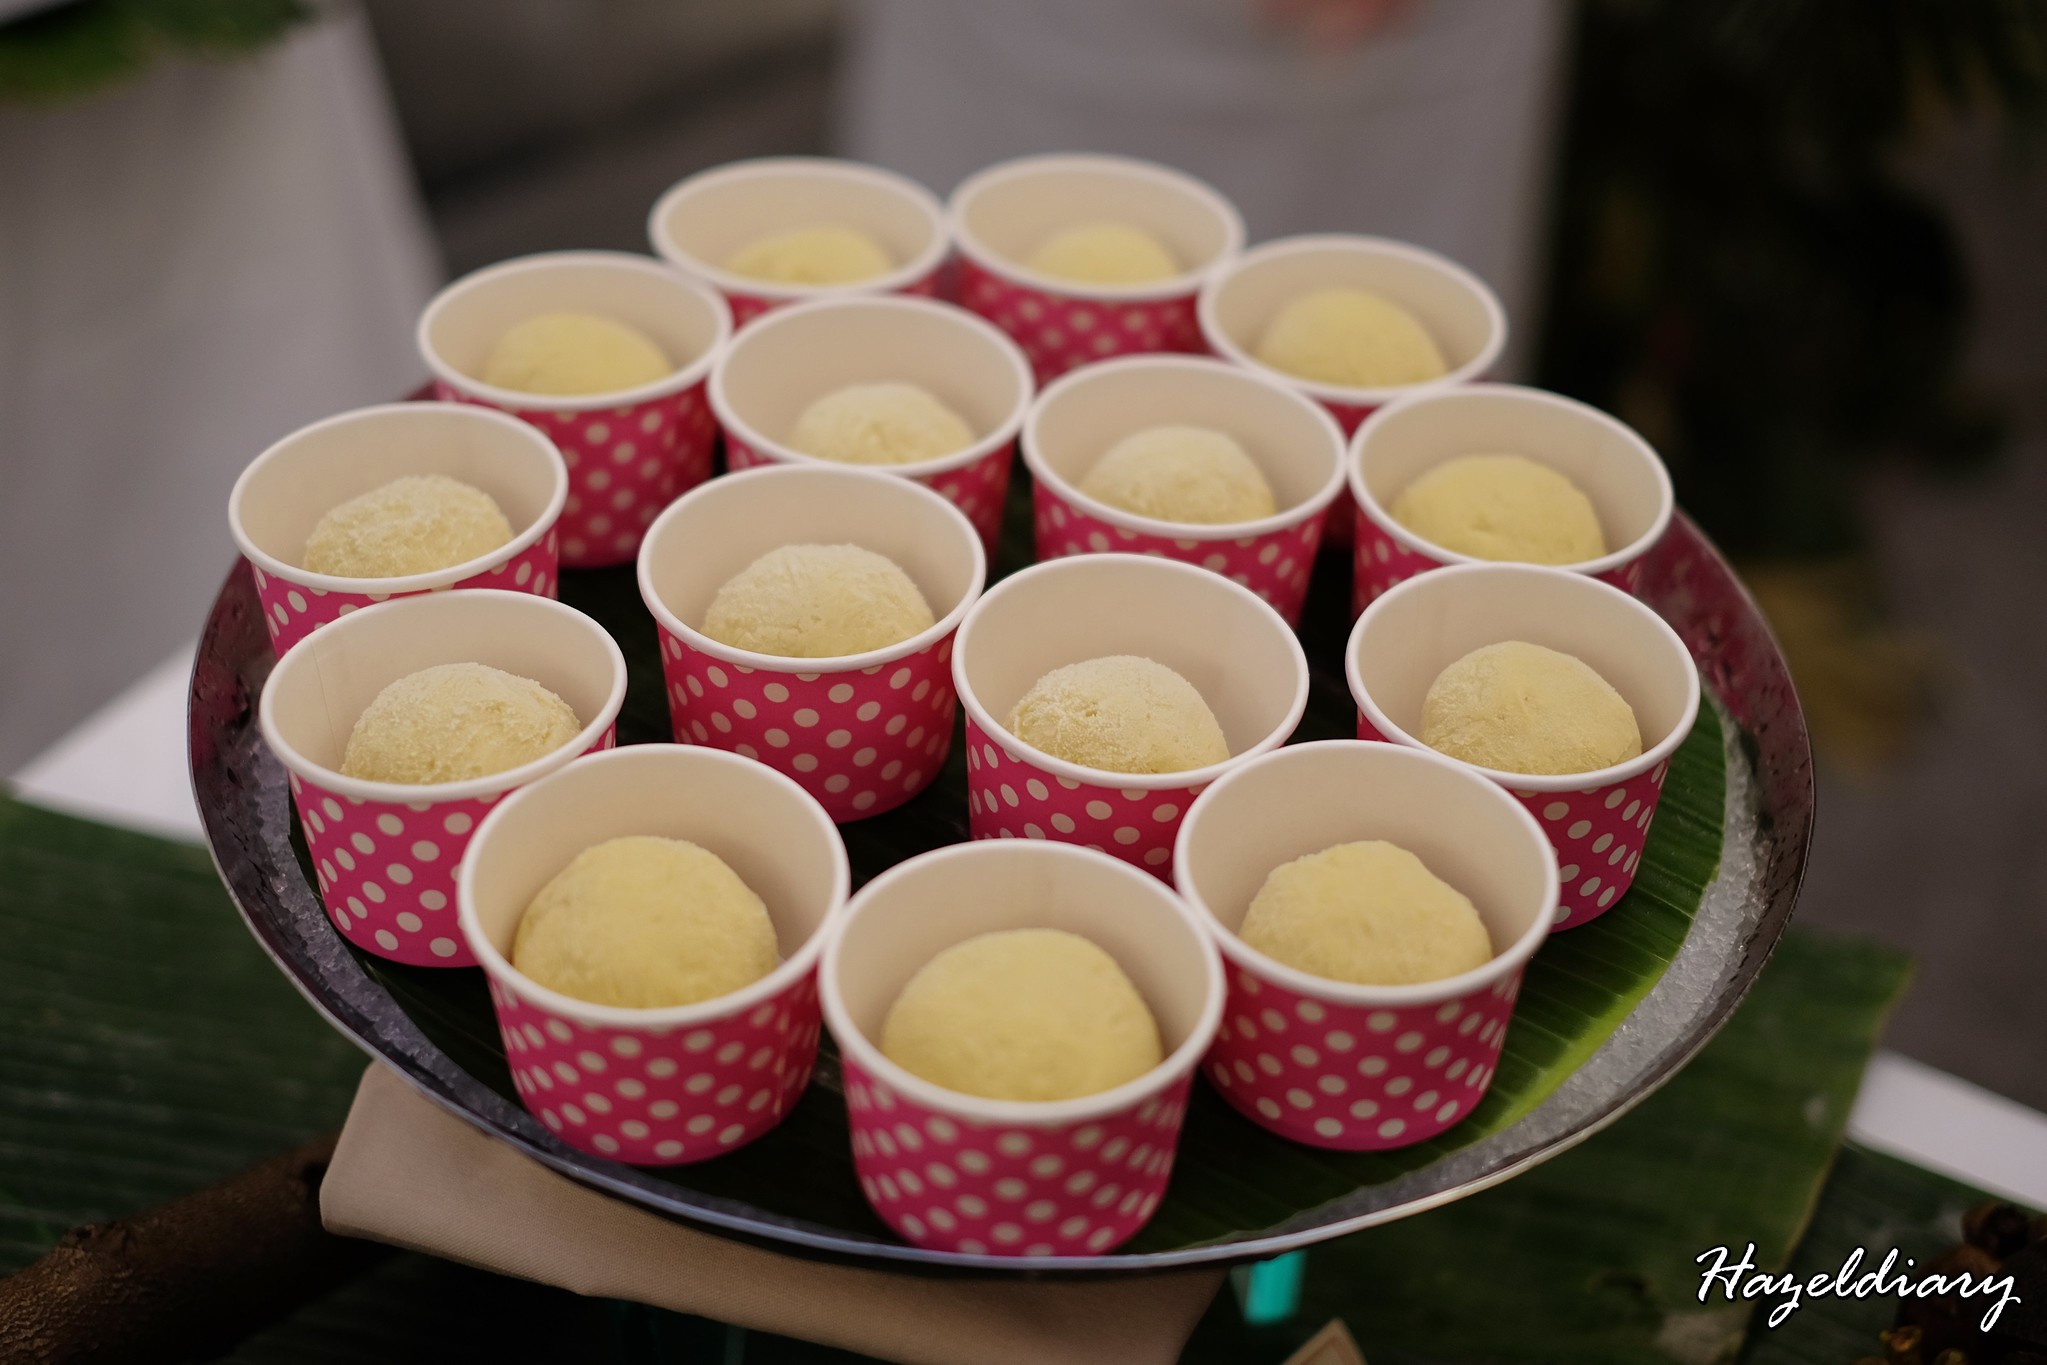 Goodwood Park Hotel-Durian Desserts-Ice-cream